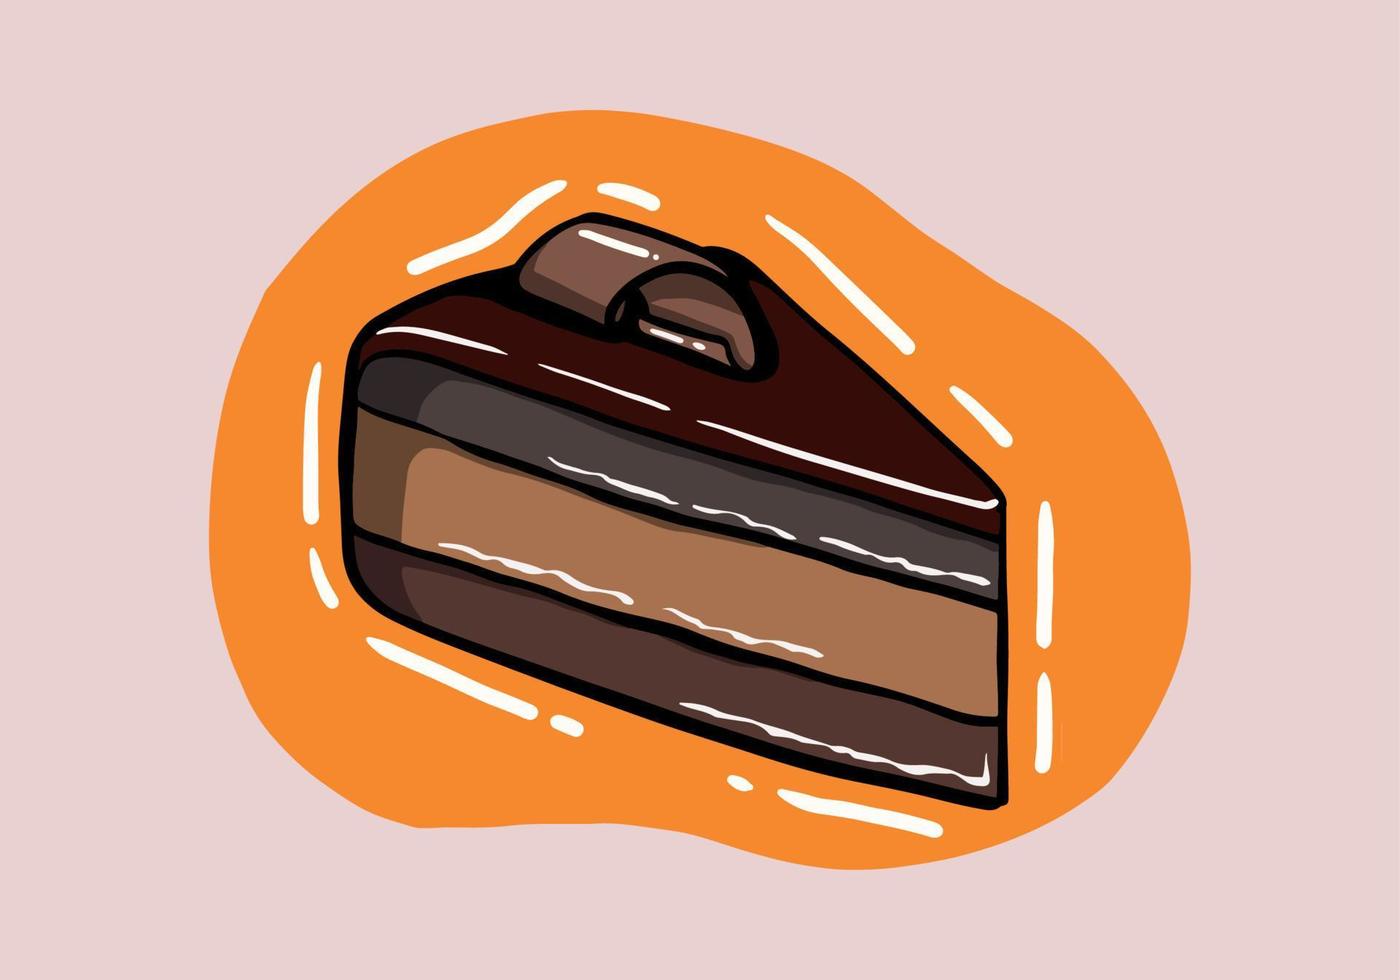 Chocolate cake piece isolated choc layered dessert. Vector bakery food, creamy pie